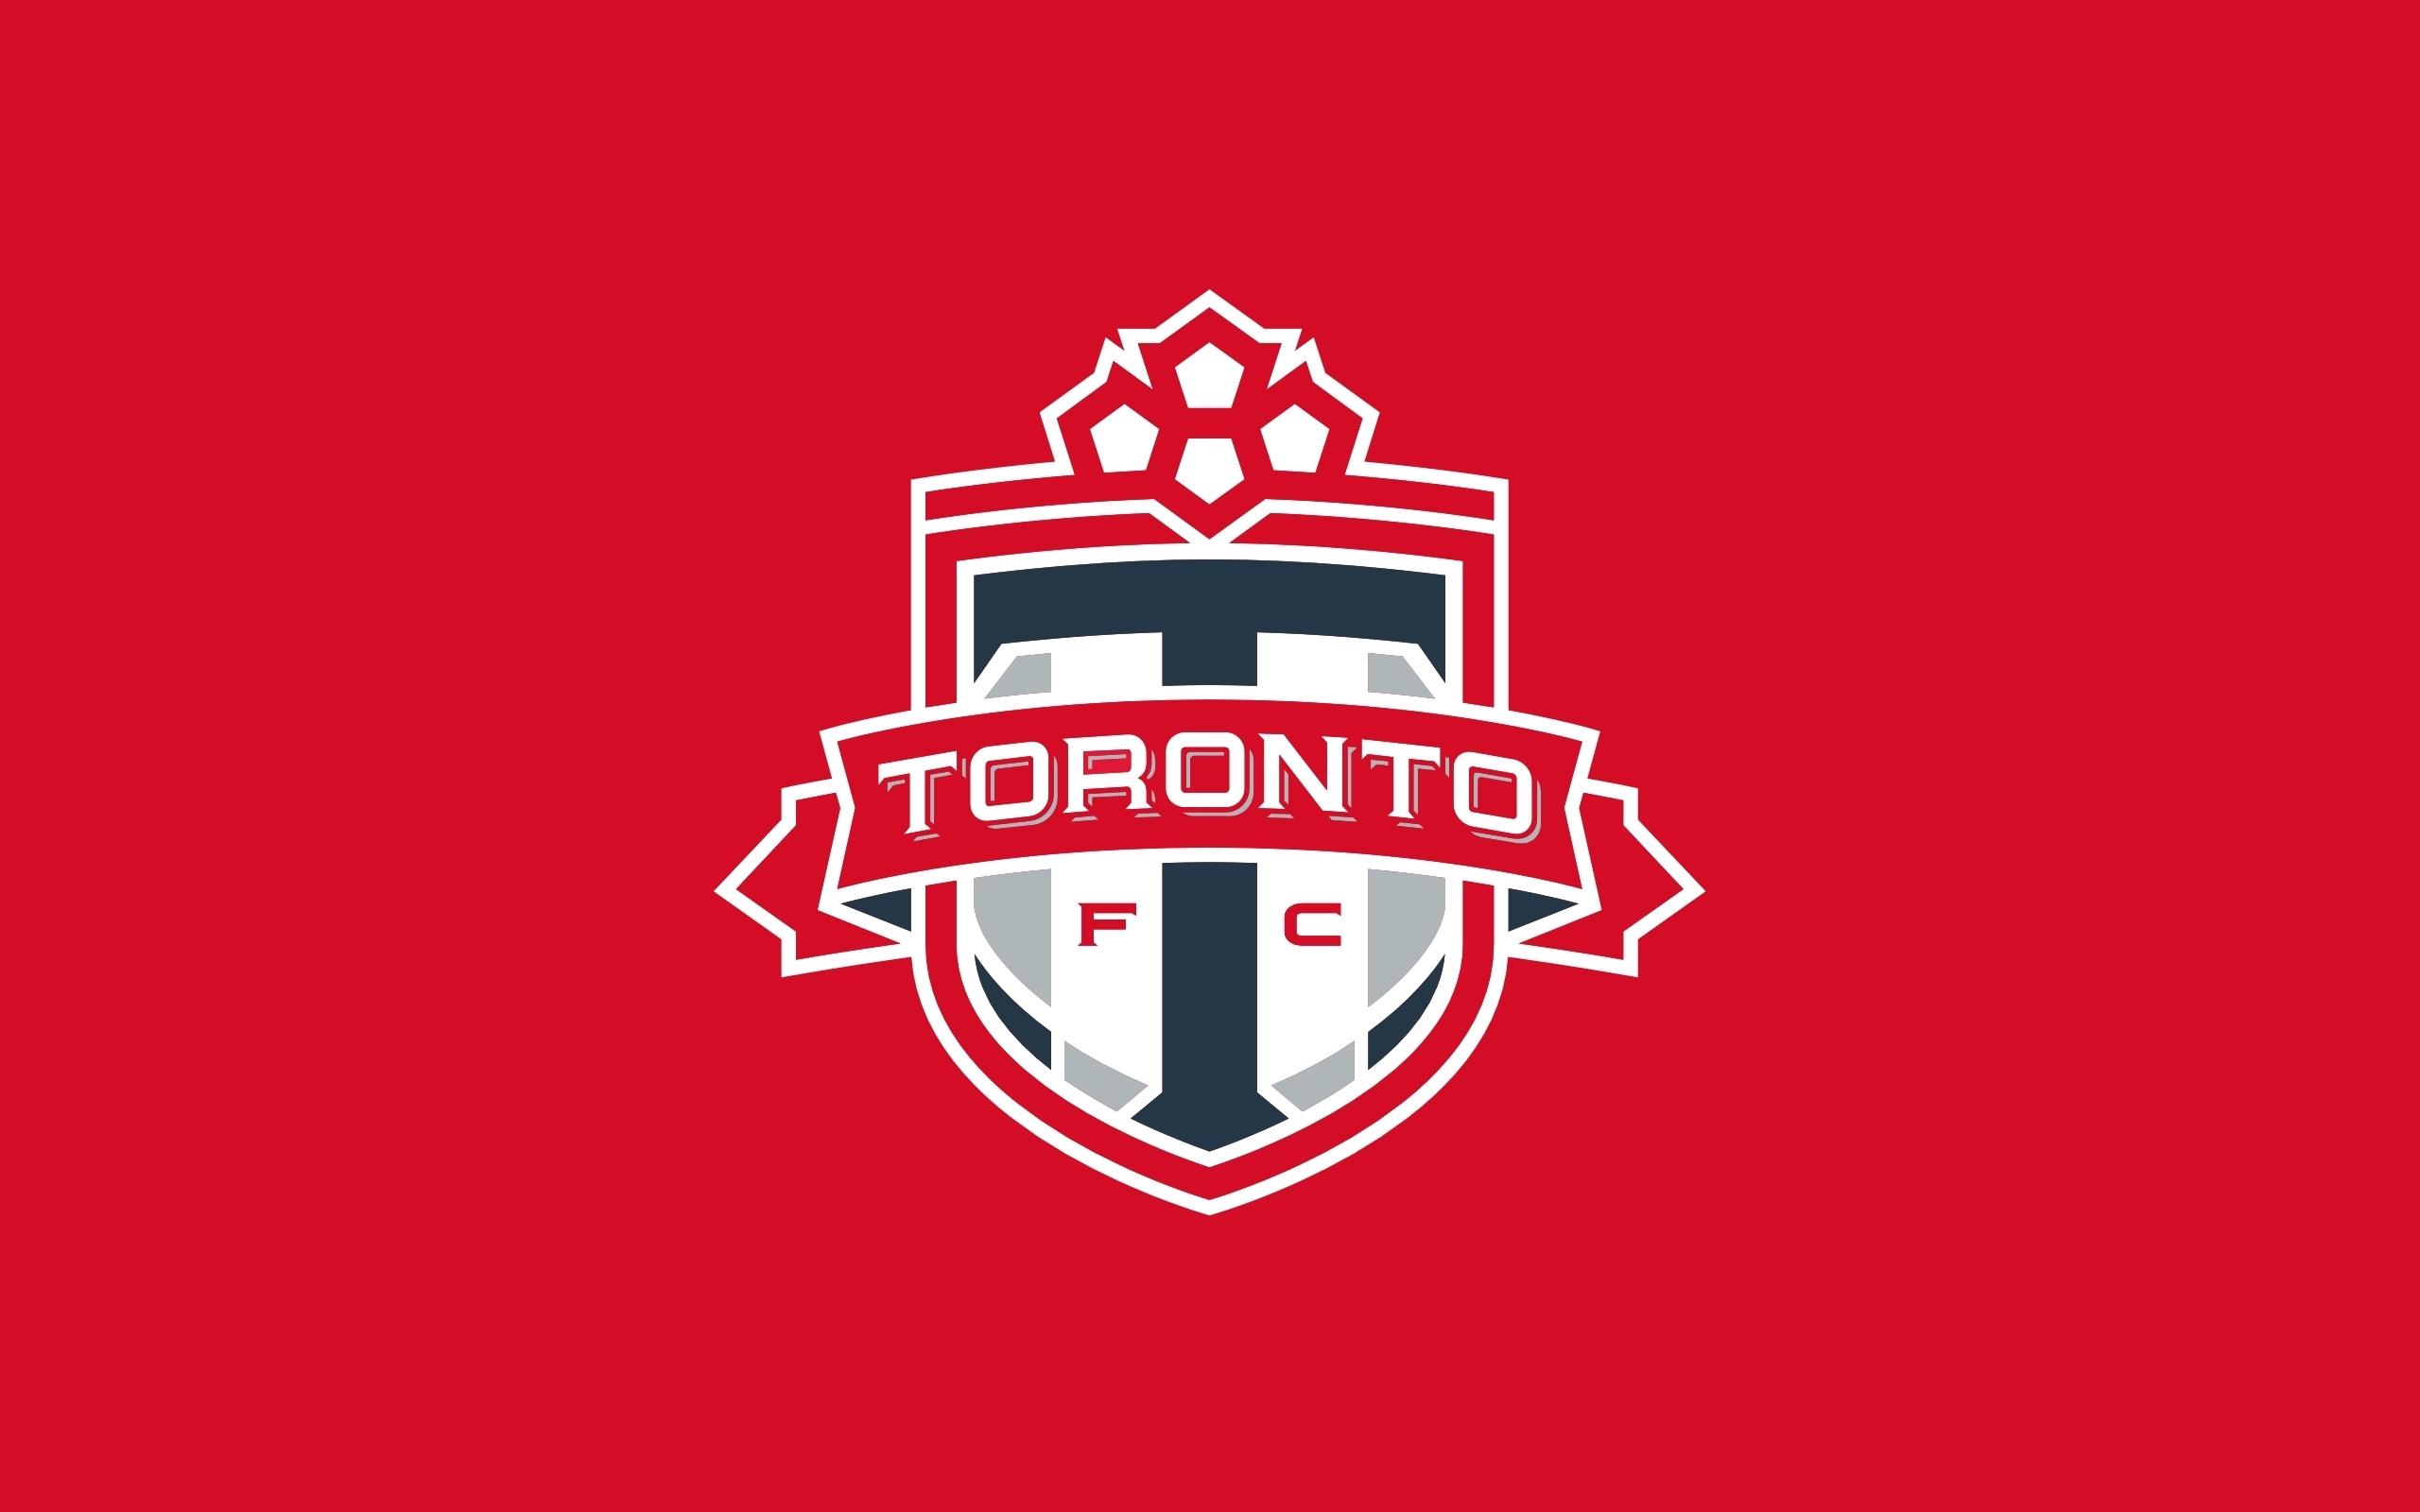 MLS Toronto FC Logo Red wallpapers in Soccer